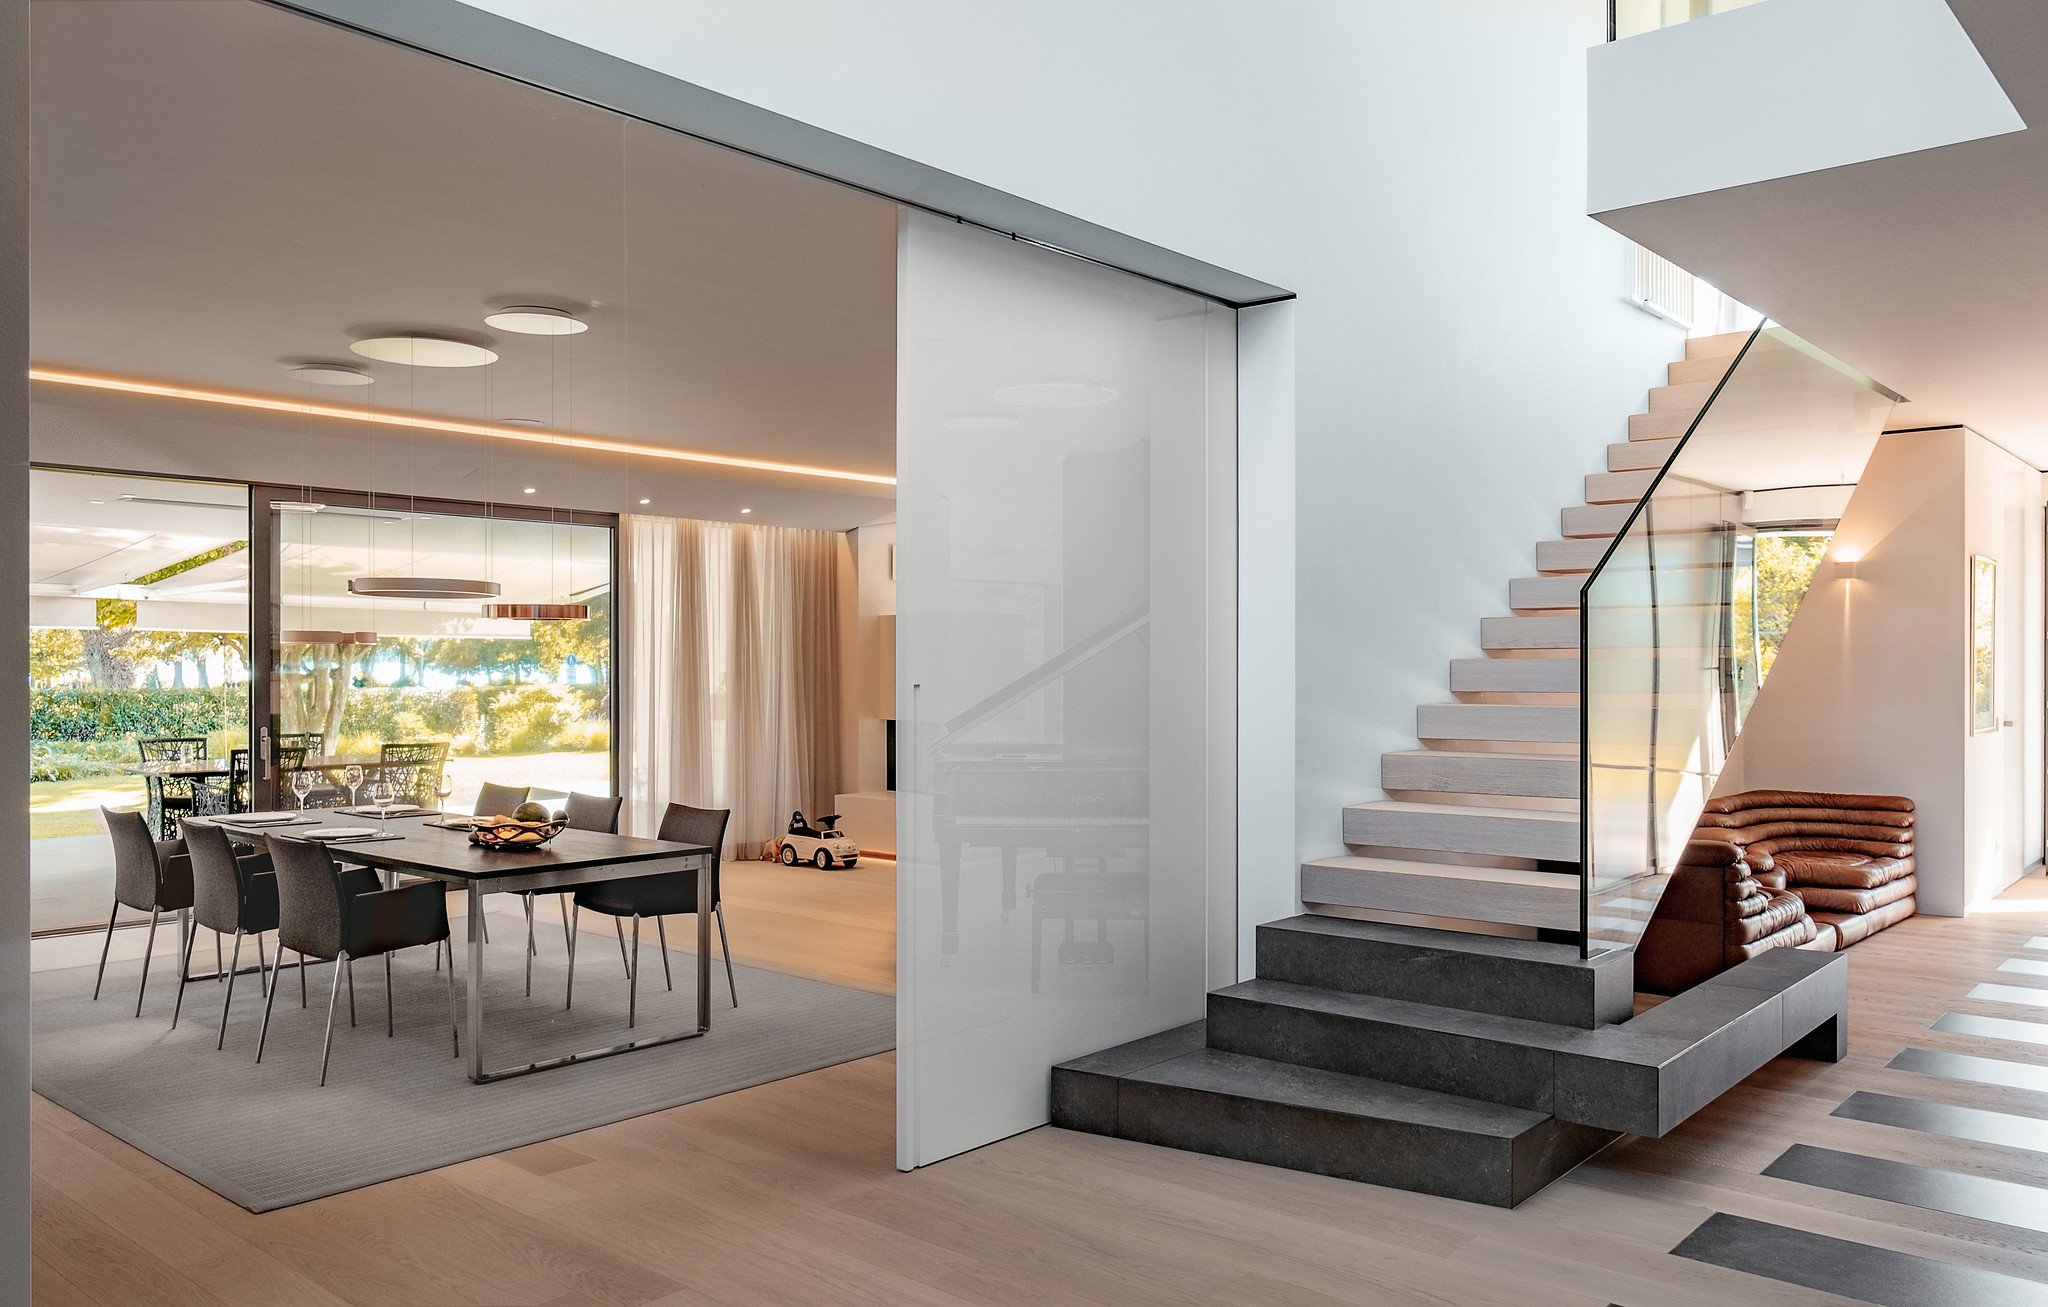 LAKE HOUSE | Radolfzell by Lee+Mir Architekten